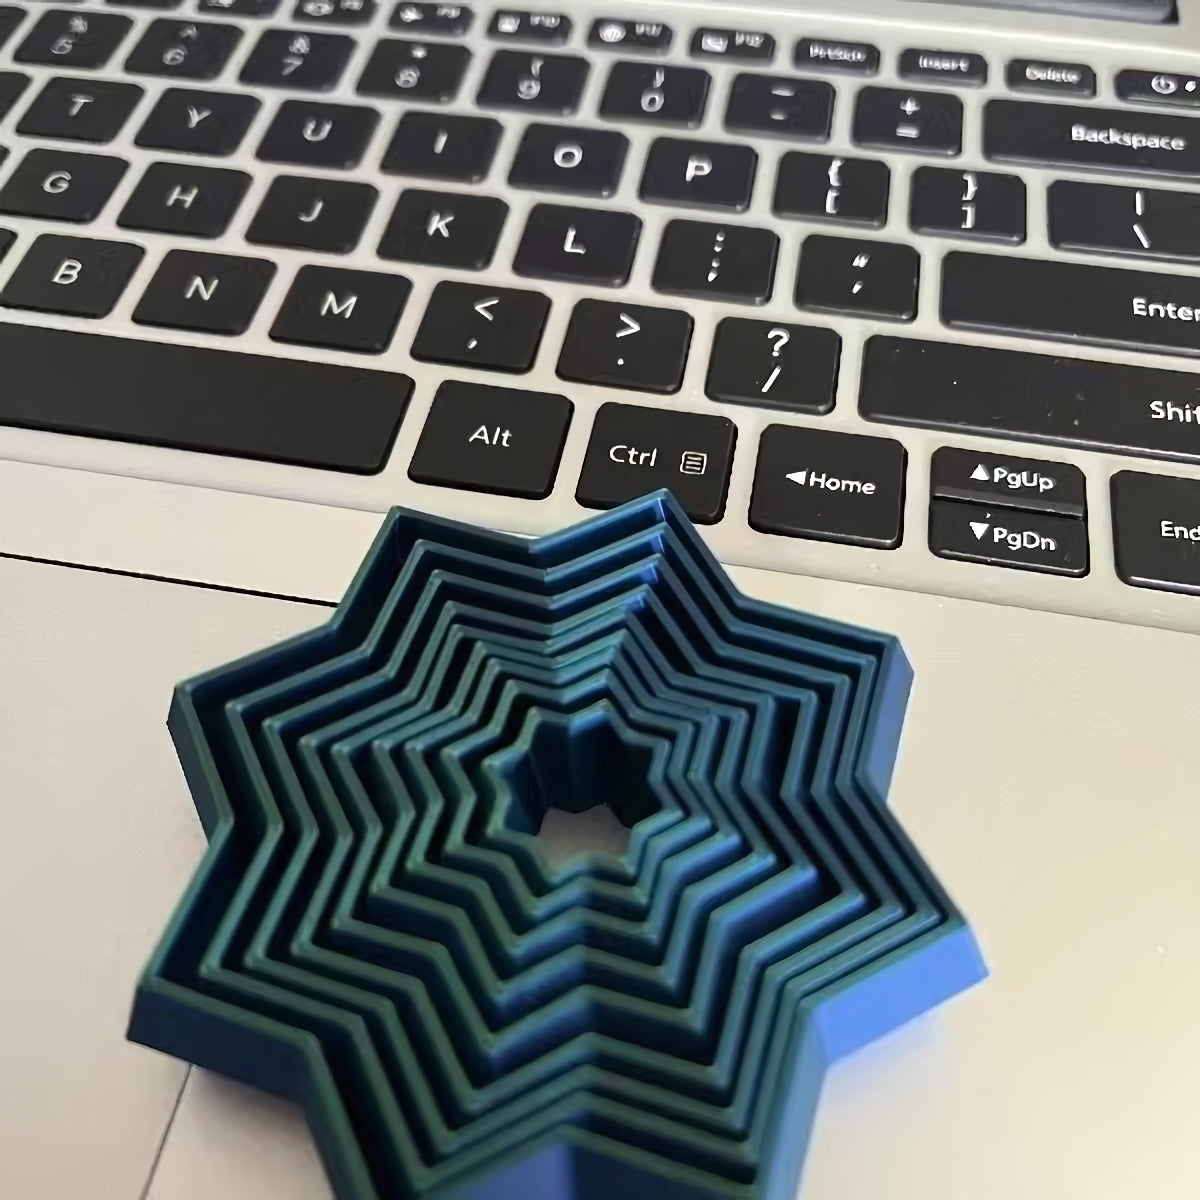 3D Printed Star Spiral Tower Mesmerizing Gravity Fidget Toy - PANSEKtoy